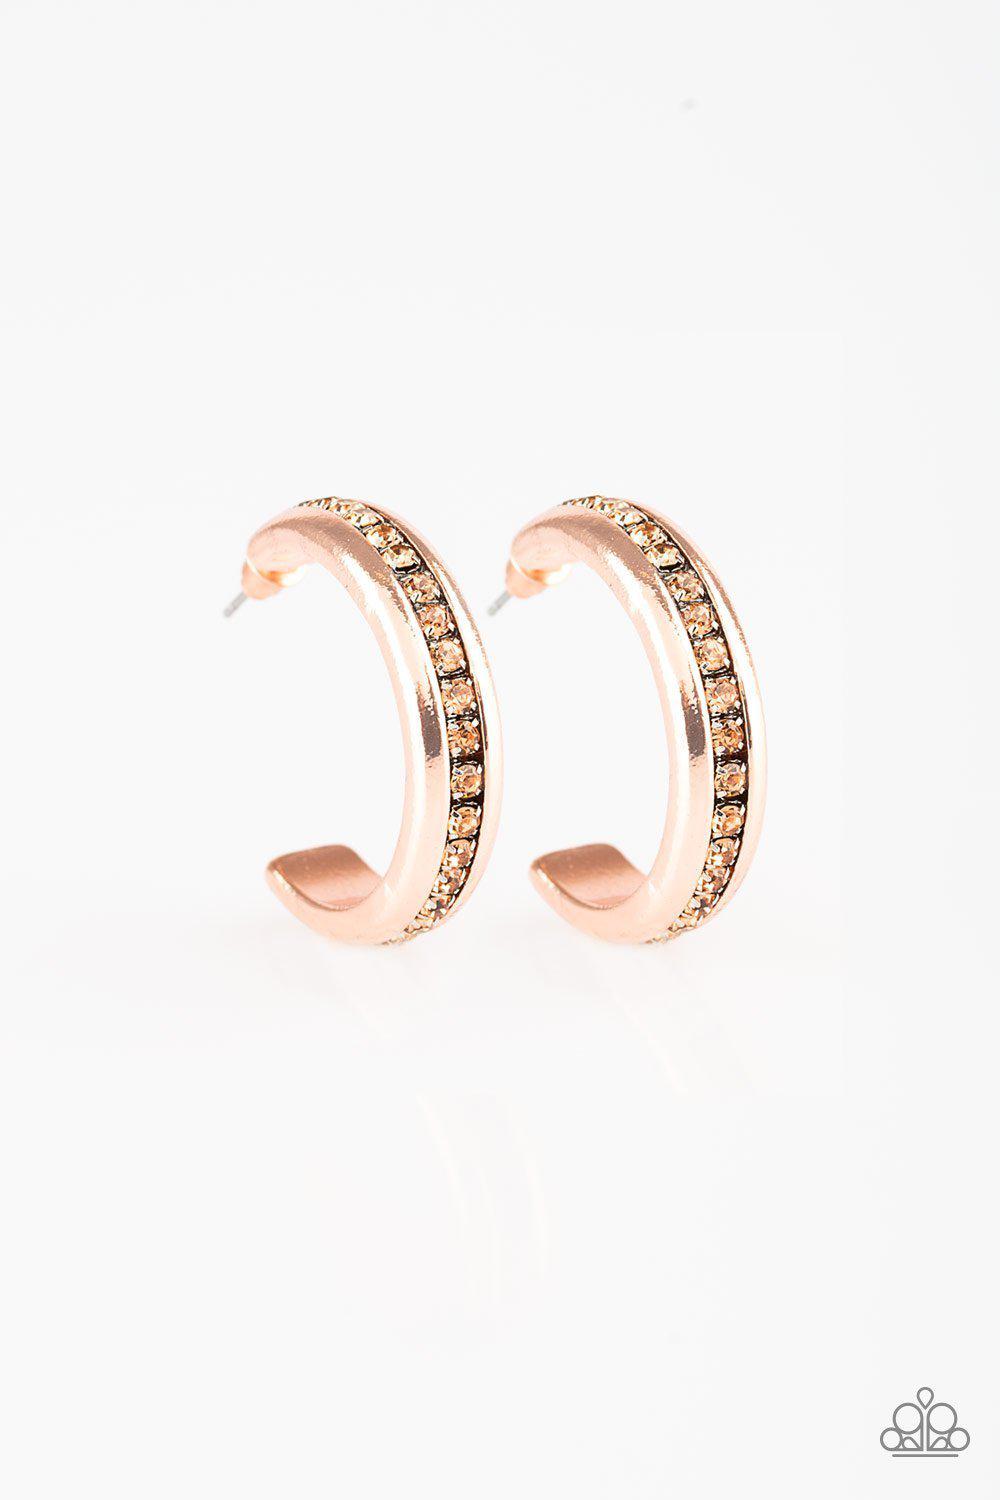 5th Avenue Fashionista Copper Rhinestone Hoop Earrings - Paparazzi Accessories - lightbox -CarasShop.com - $5 Jewelry by Cara Jewels